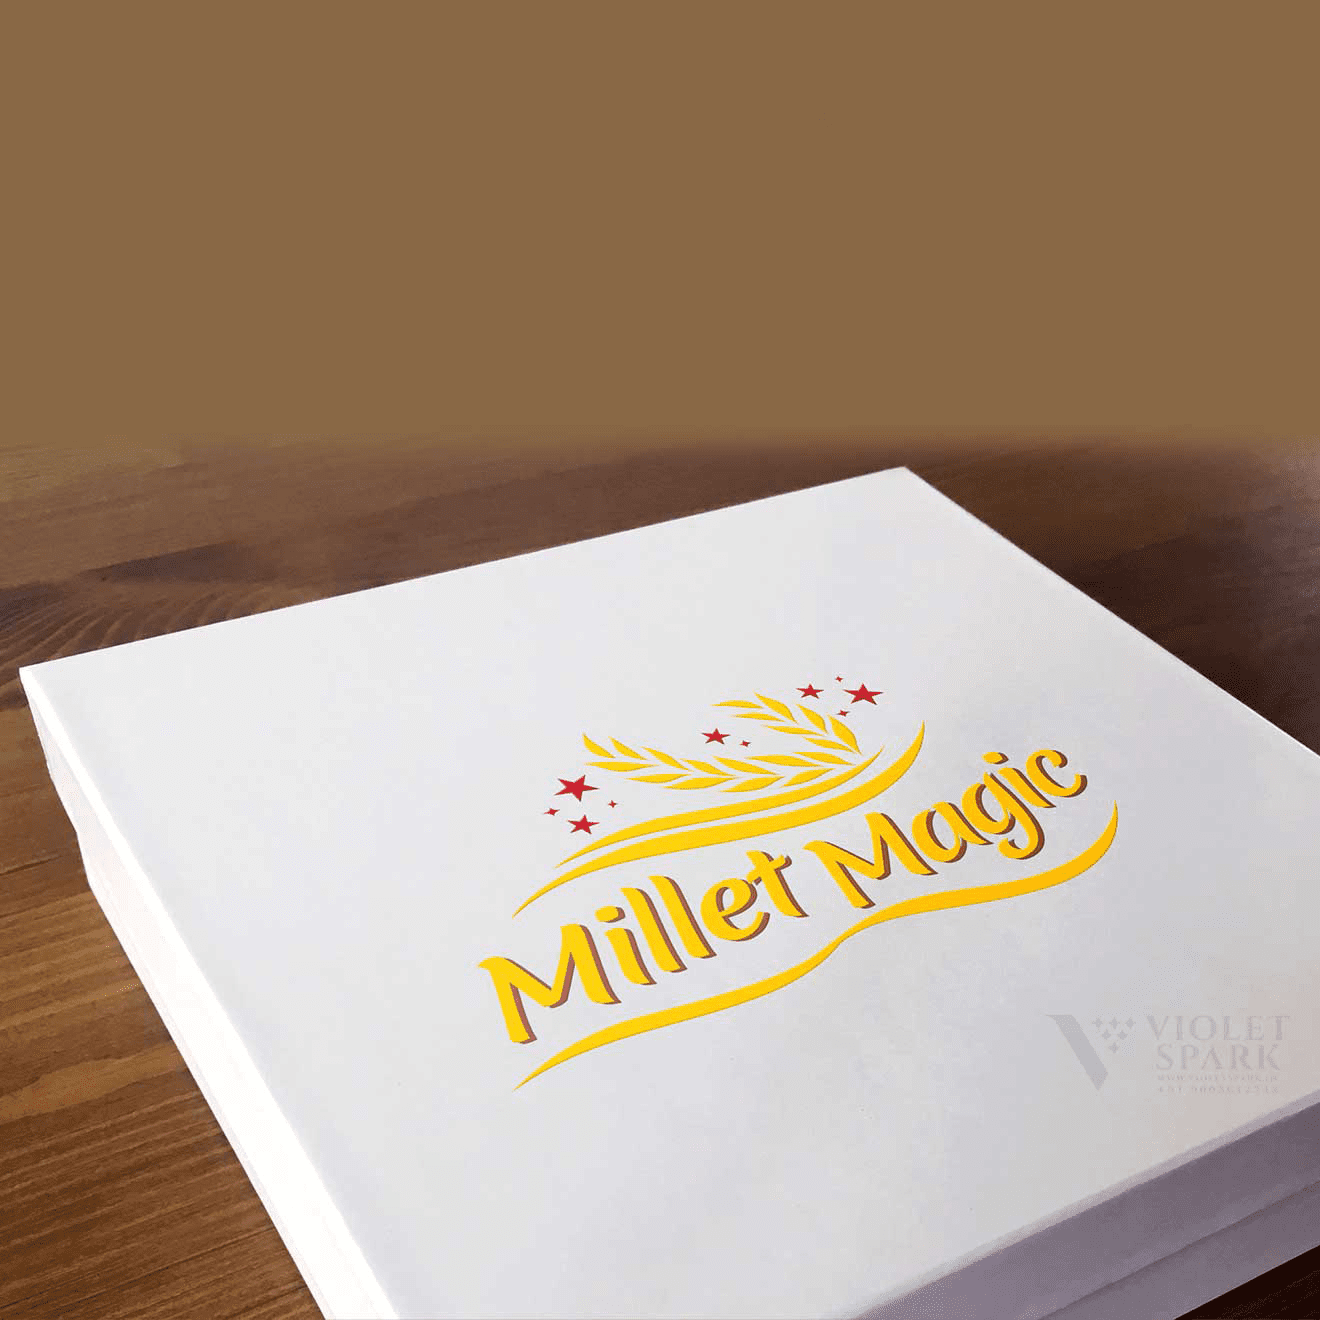 Millet Magic Gift Box Packaging Branding Packaging Design Digital Marketing in Chennai by Violet Spark